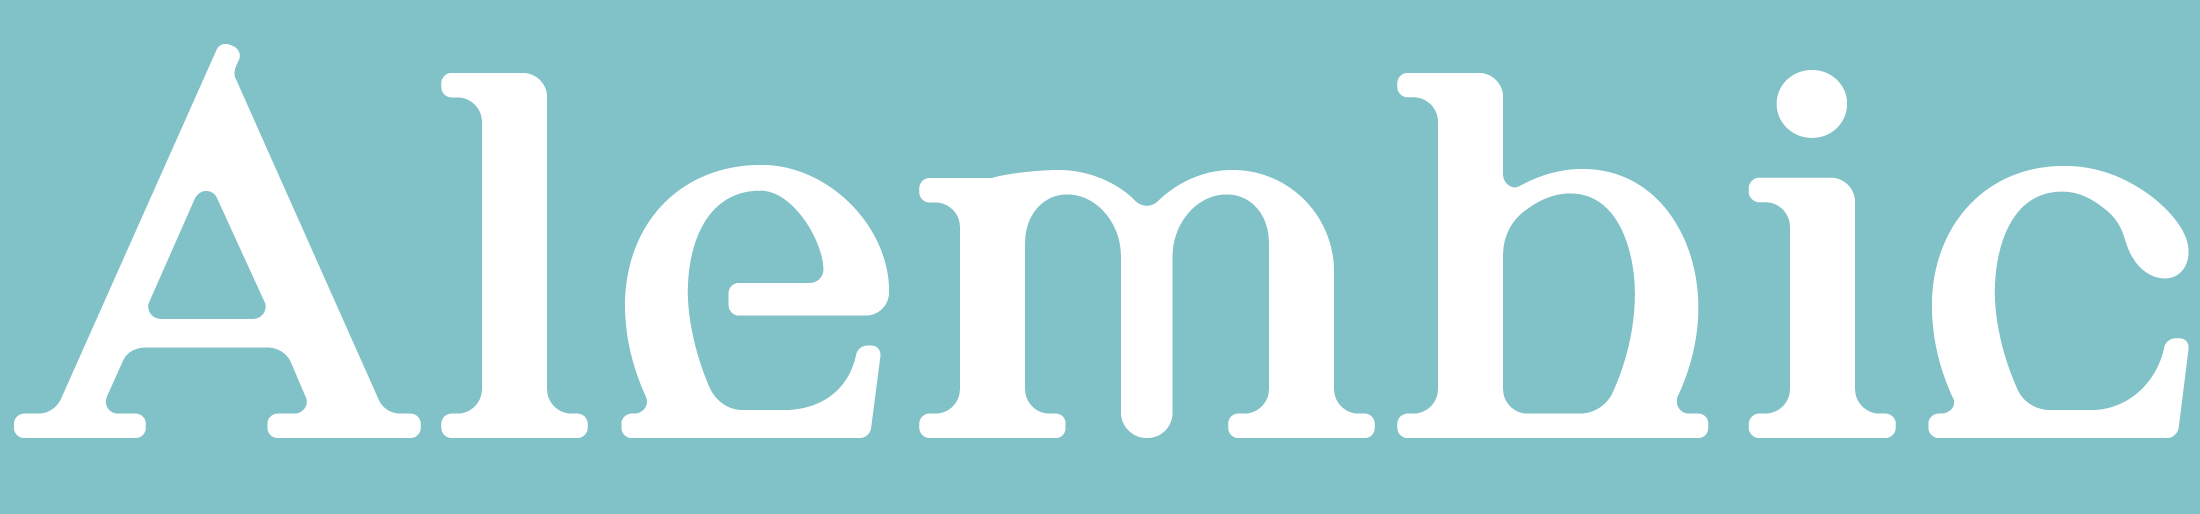 Serif Font - Alembic